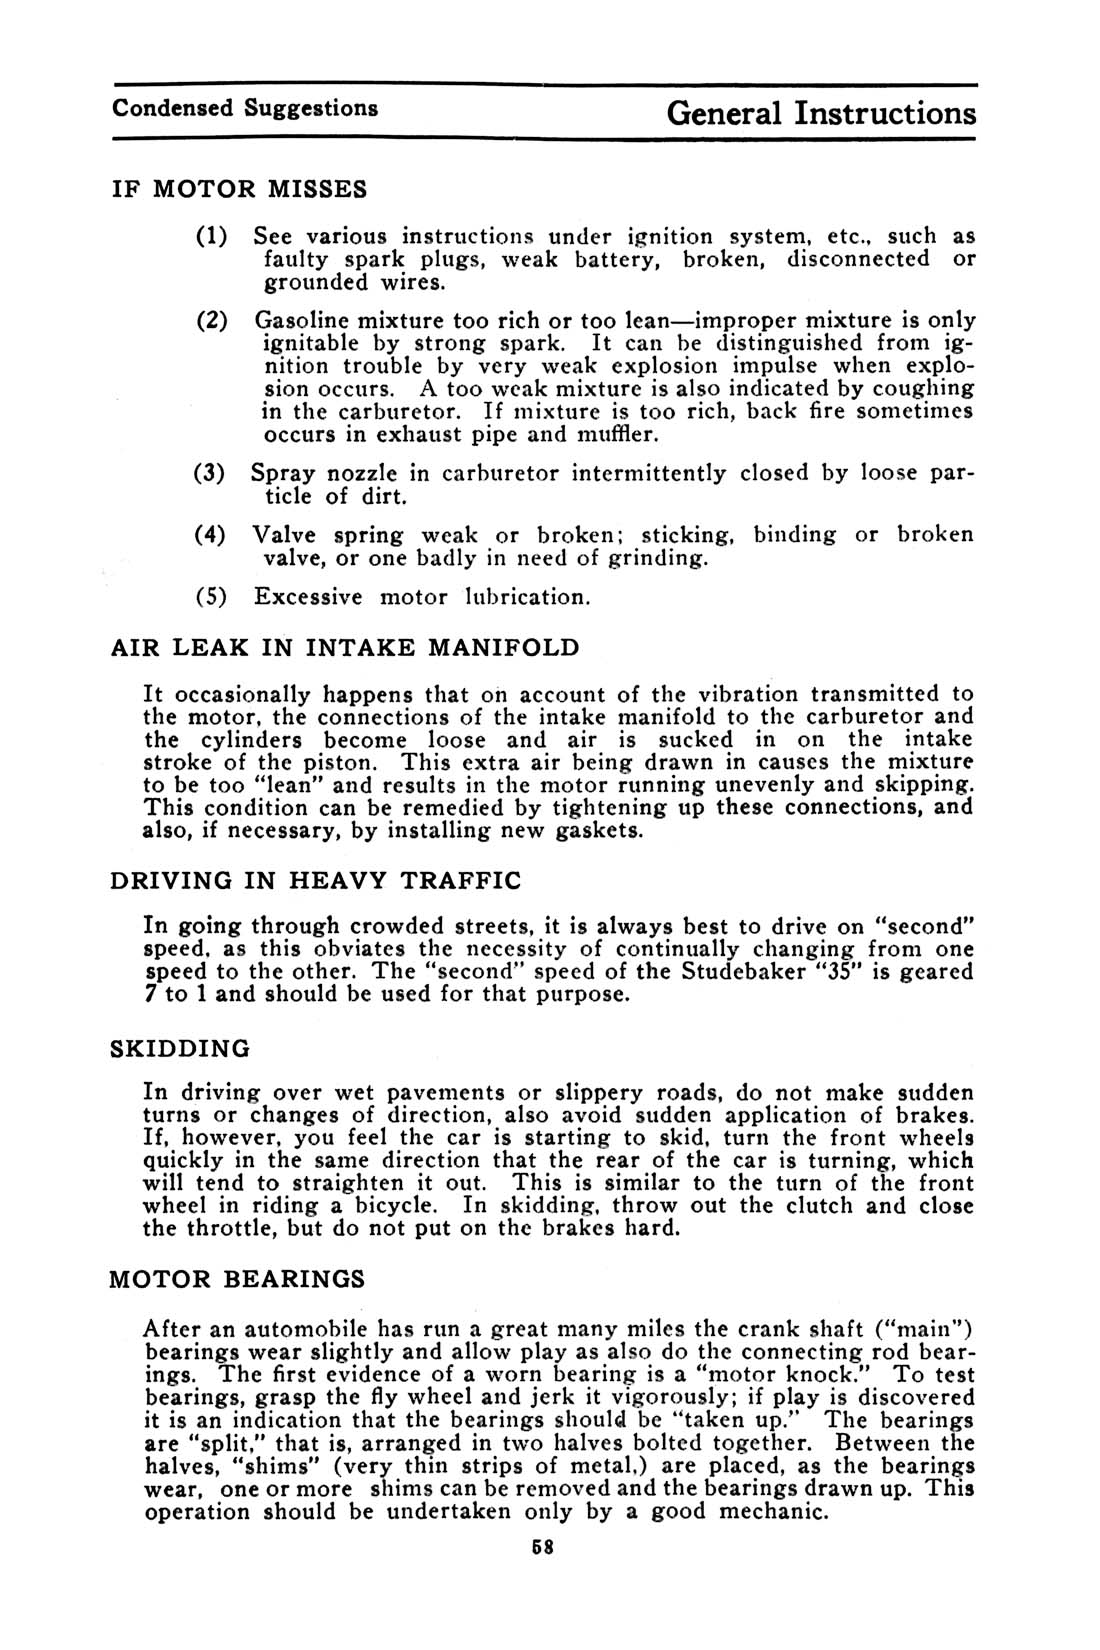 1913_Studebaker_Model_35_Manual-58